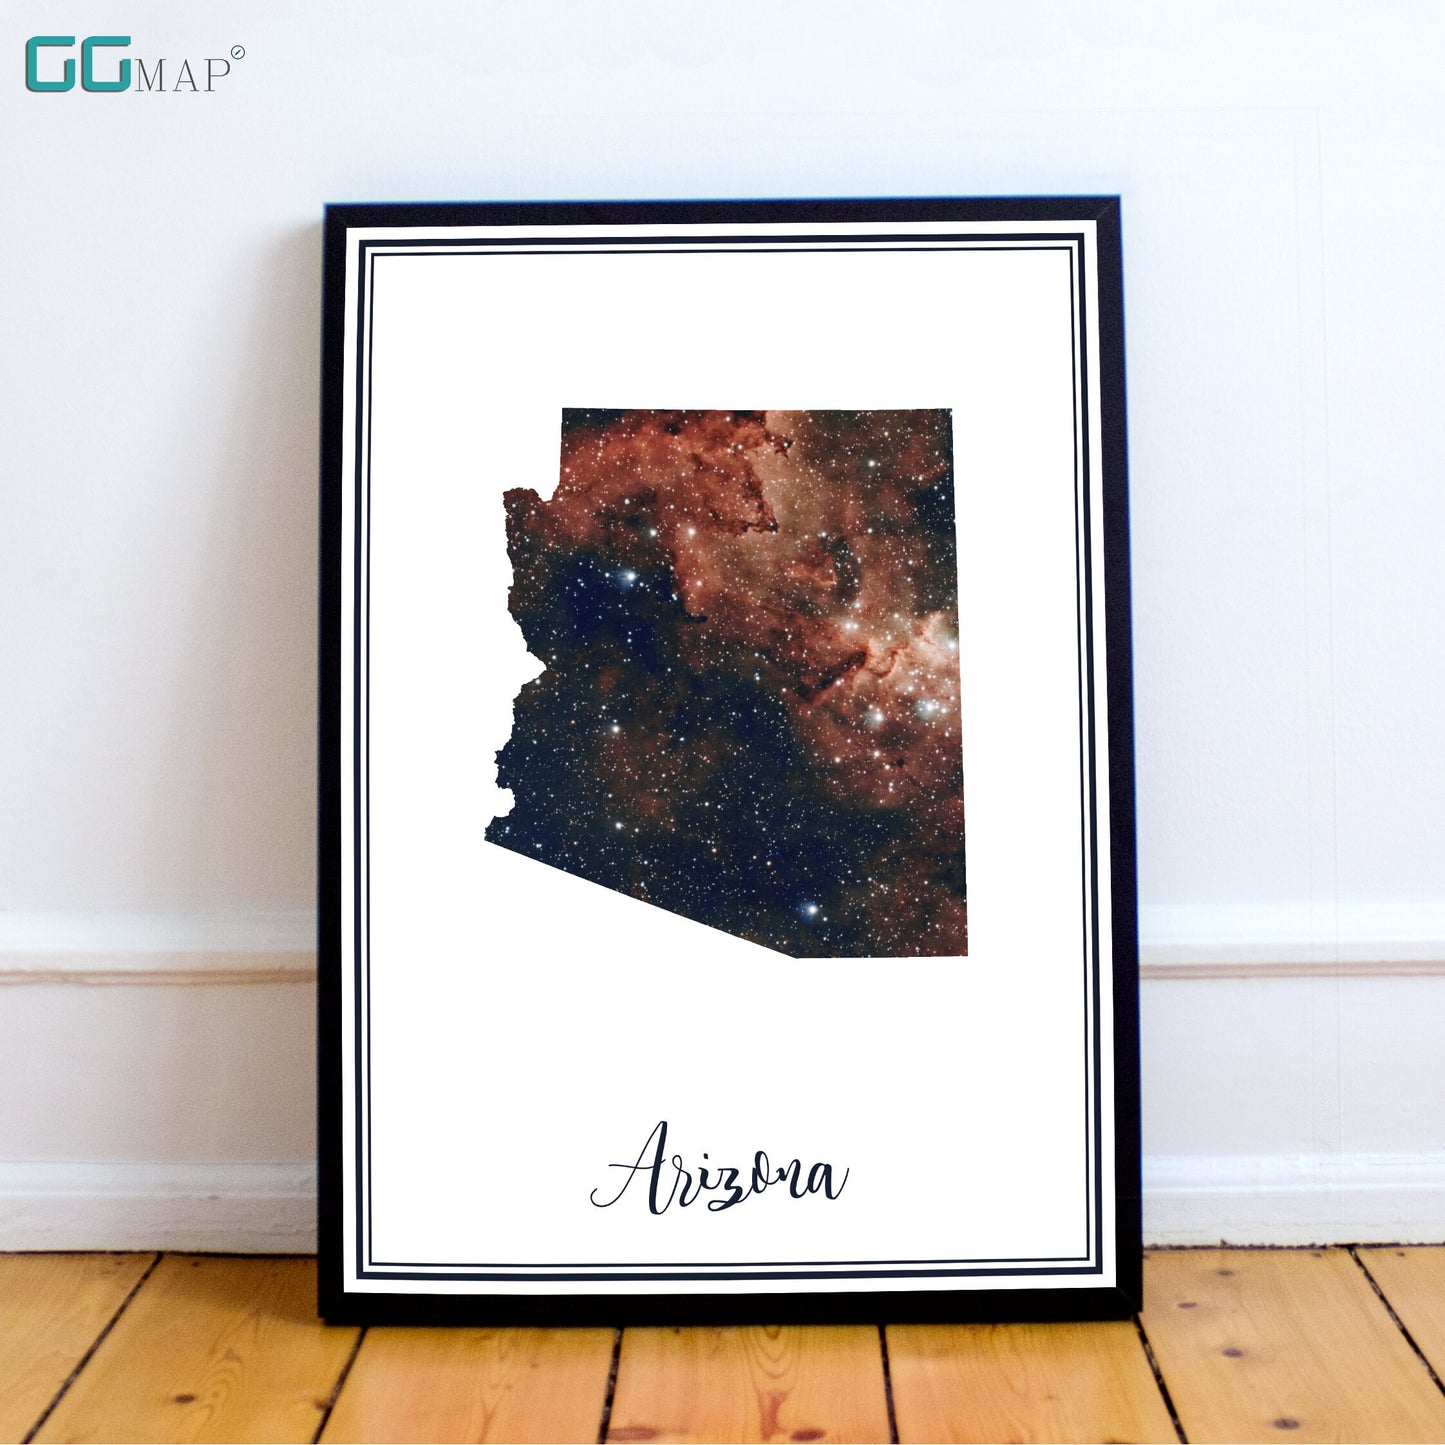 ARIZONA map - Arizona heart nebula map - Travel poster - Home Decor - Wall decor - Office map - Arizona gift - GeoGIS studio